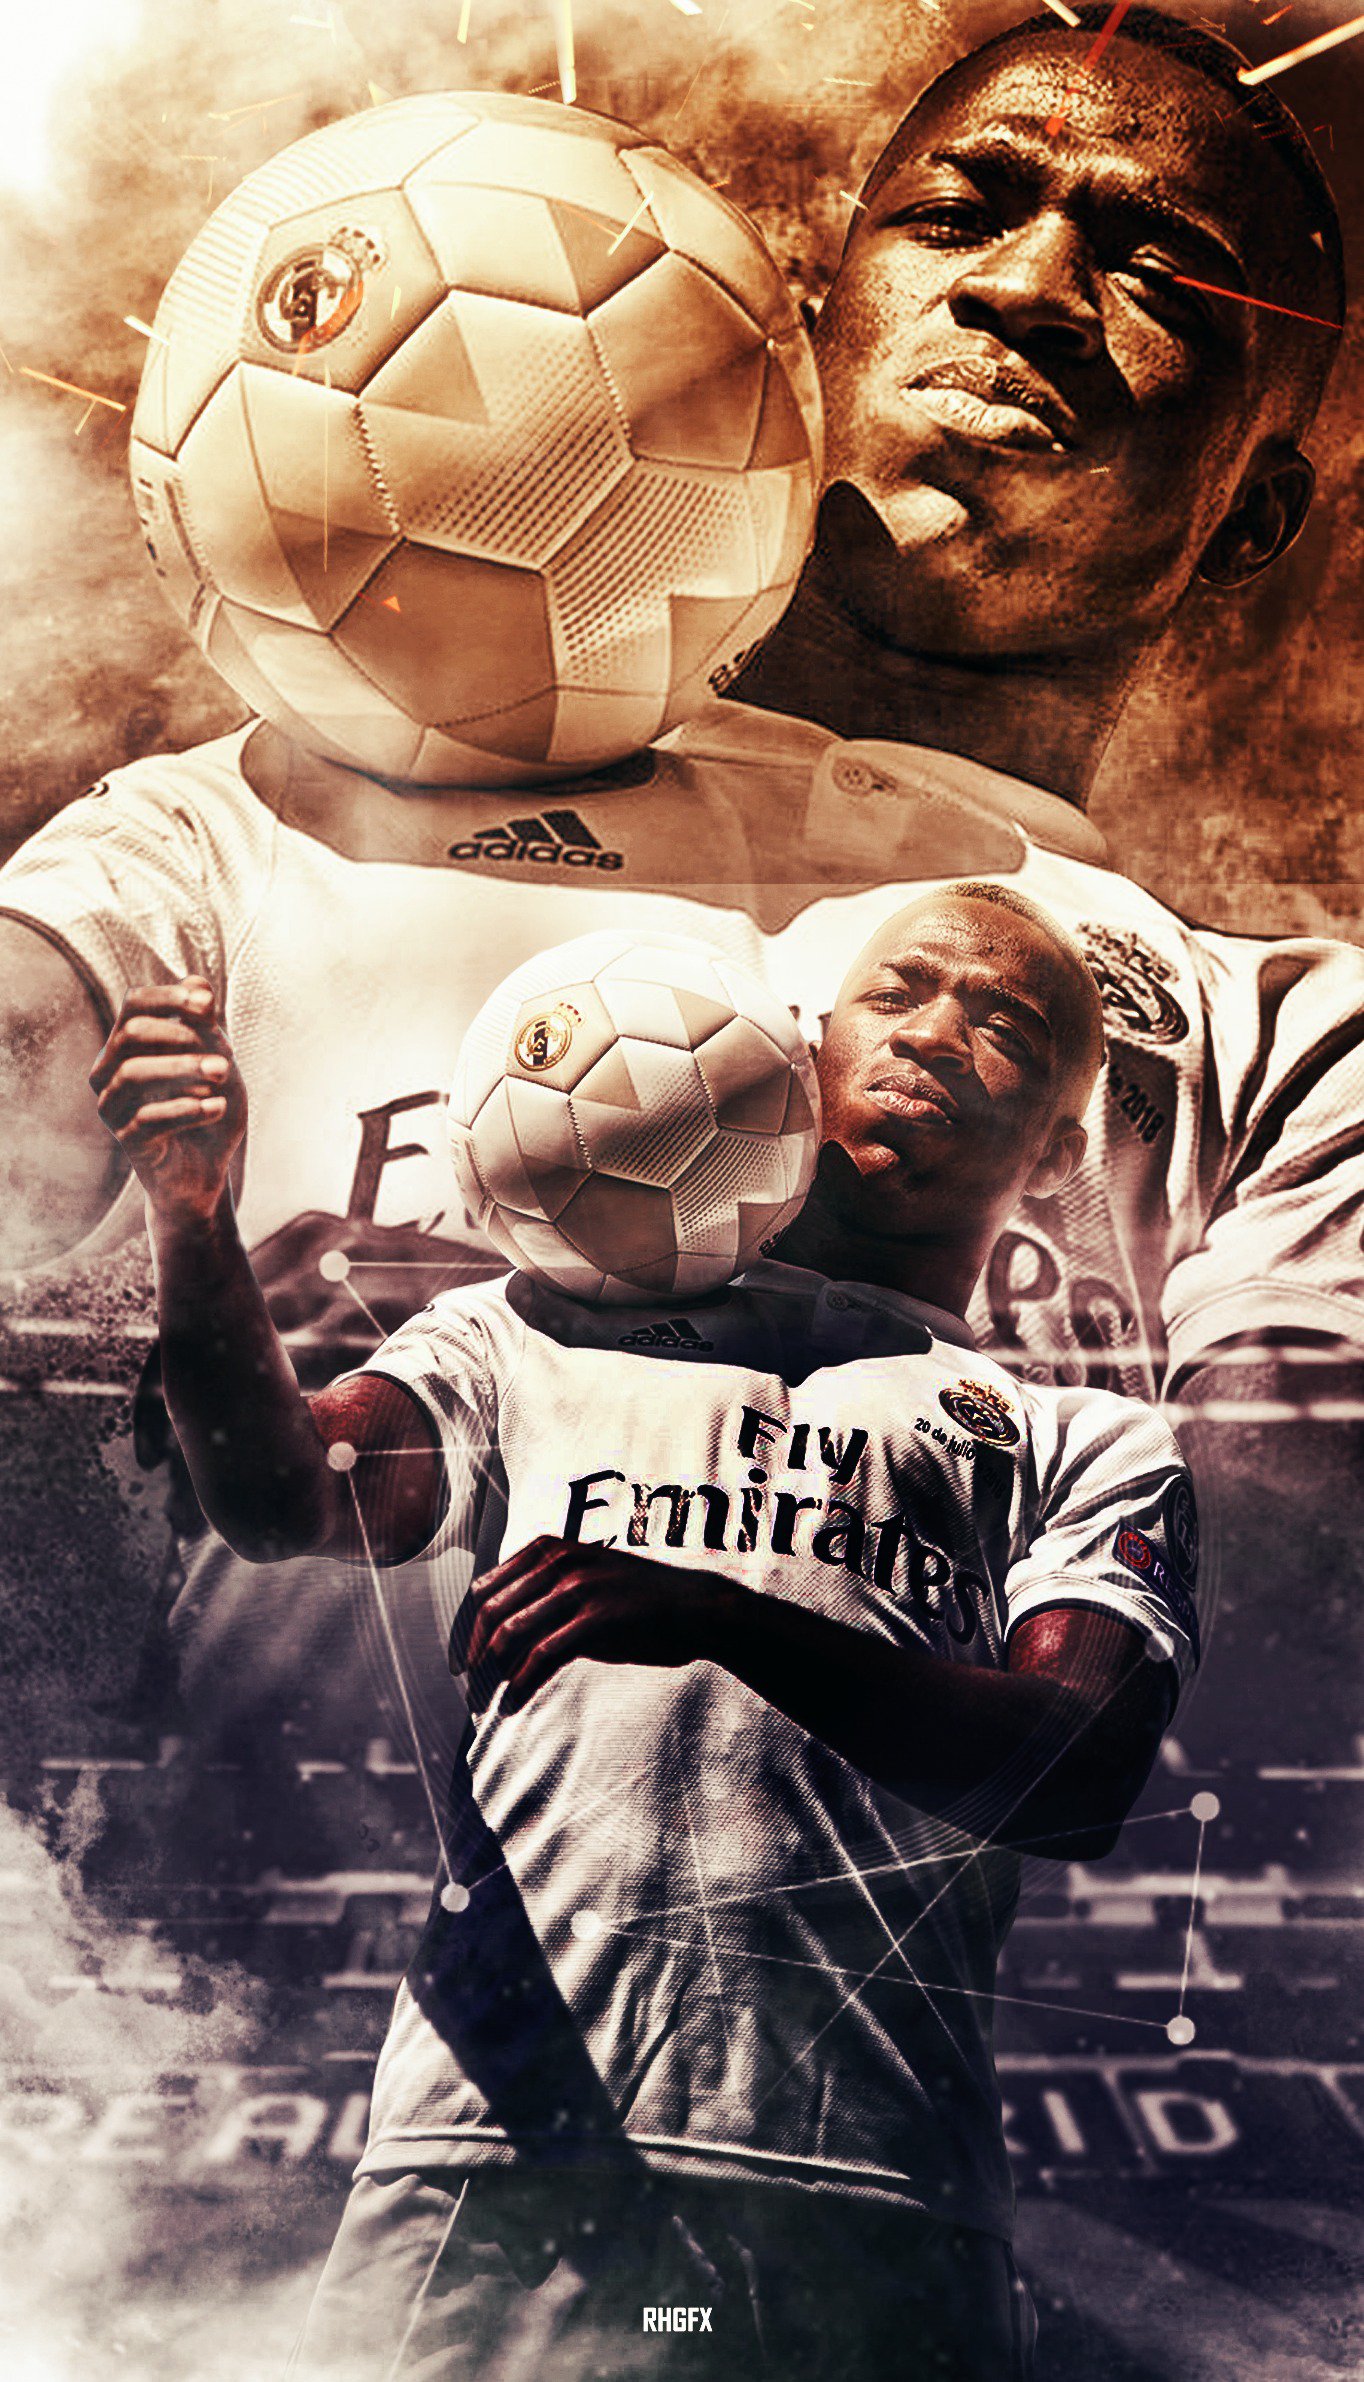 Real Madrid La Liga Champions 2020 wallpaper